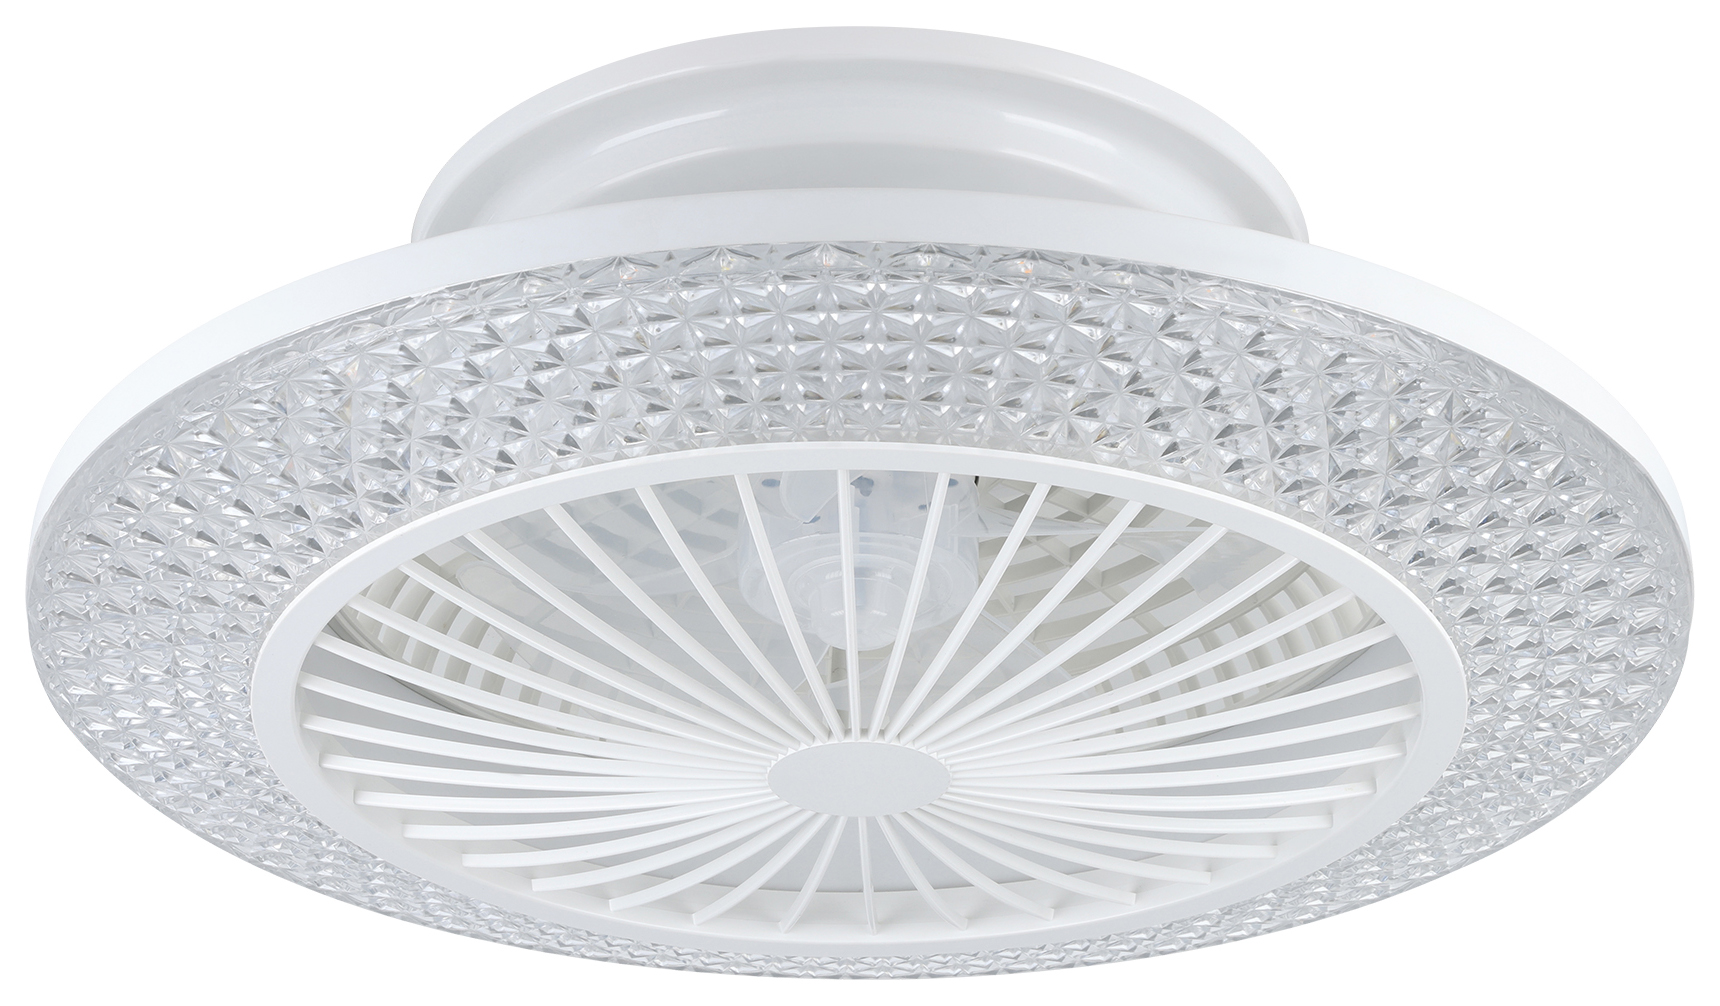 Eglo Malinska White Crystal Effect Ceiling Fan with